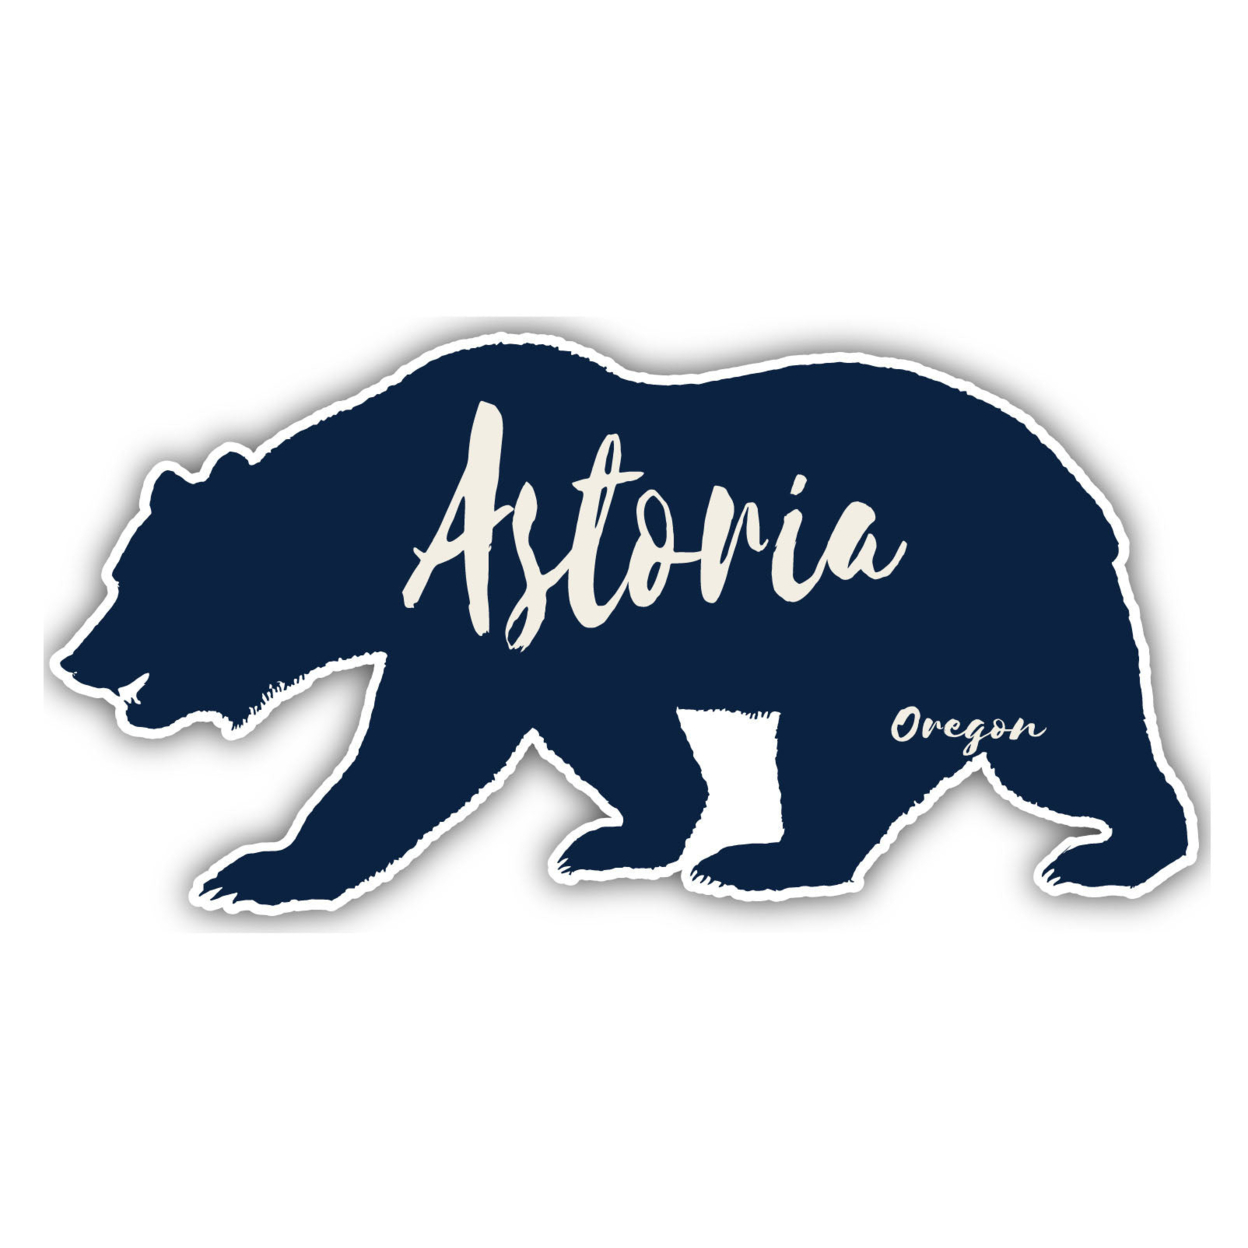 Astoria Oregon Souvenir Decorative Stickers (Choose Theme And Size) - 4-Pack, 4-Inch, Tent